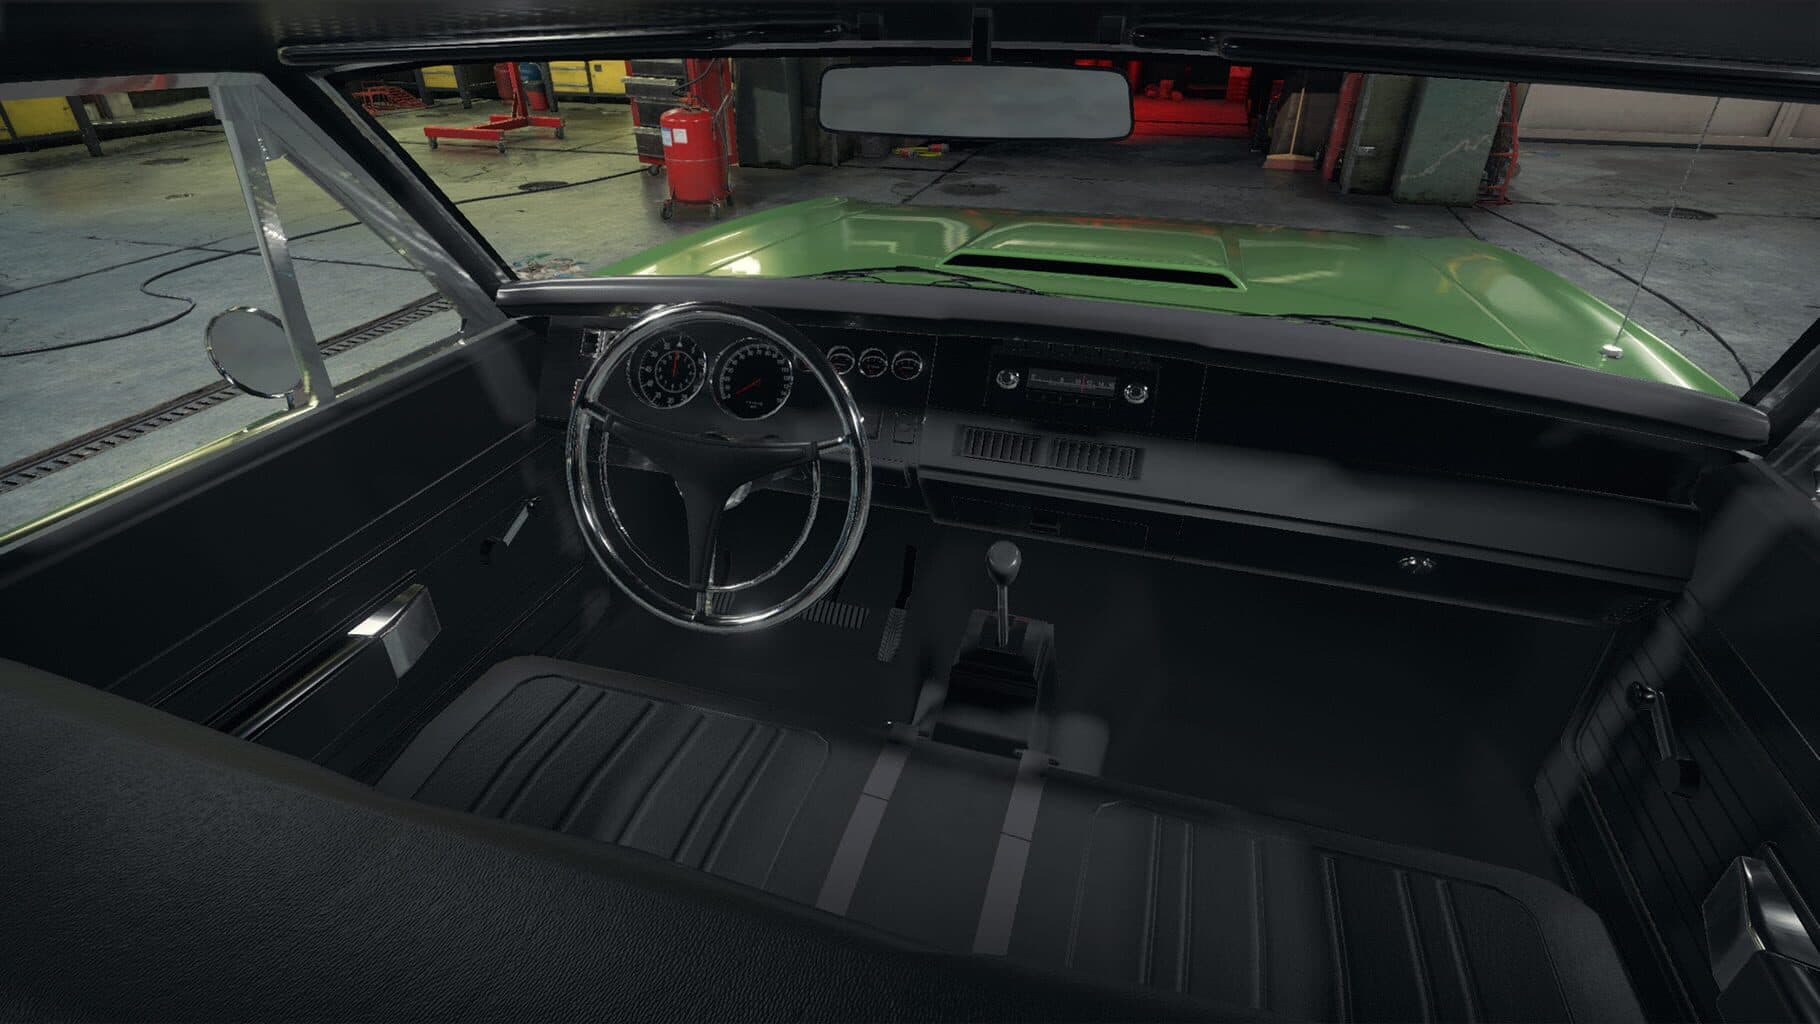 Car Mechanic Simulator 2018: Plymouth Image